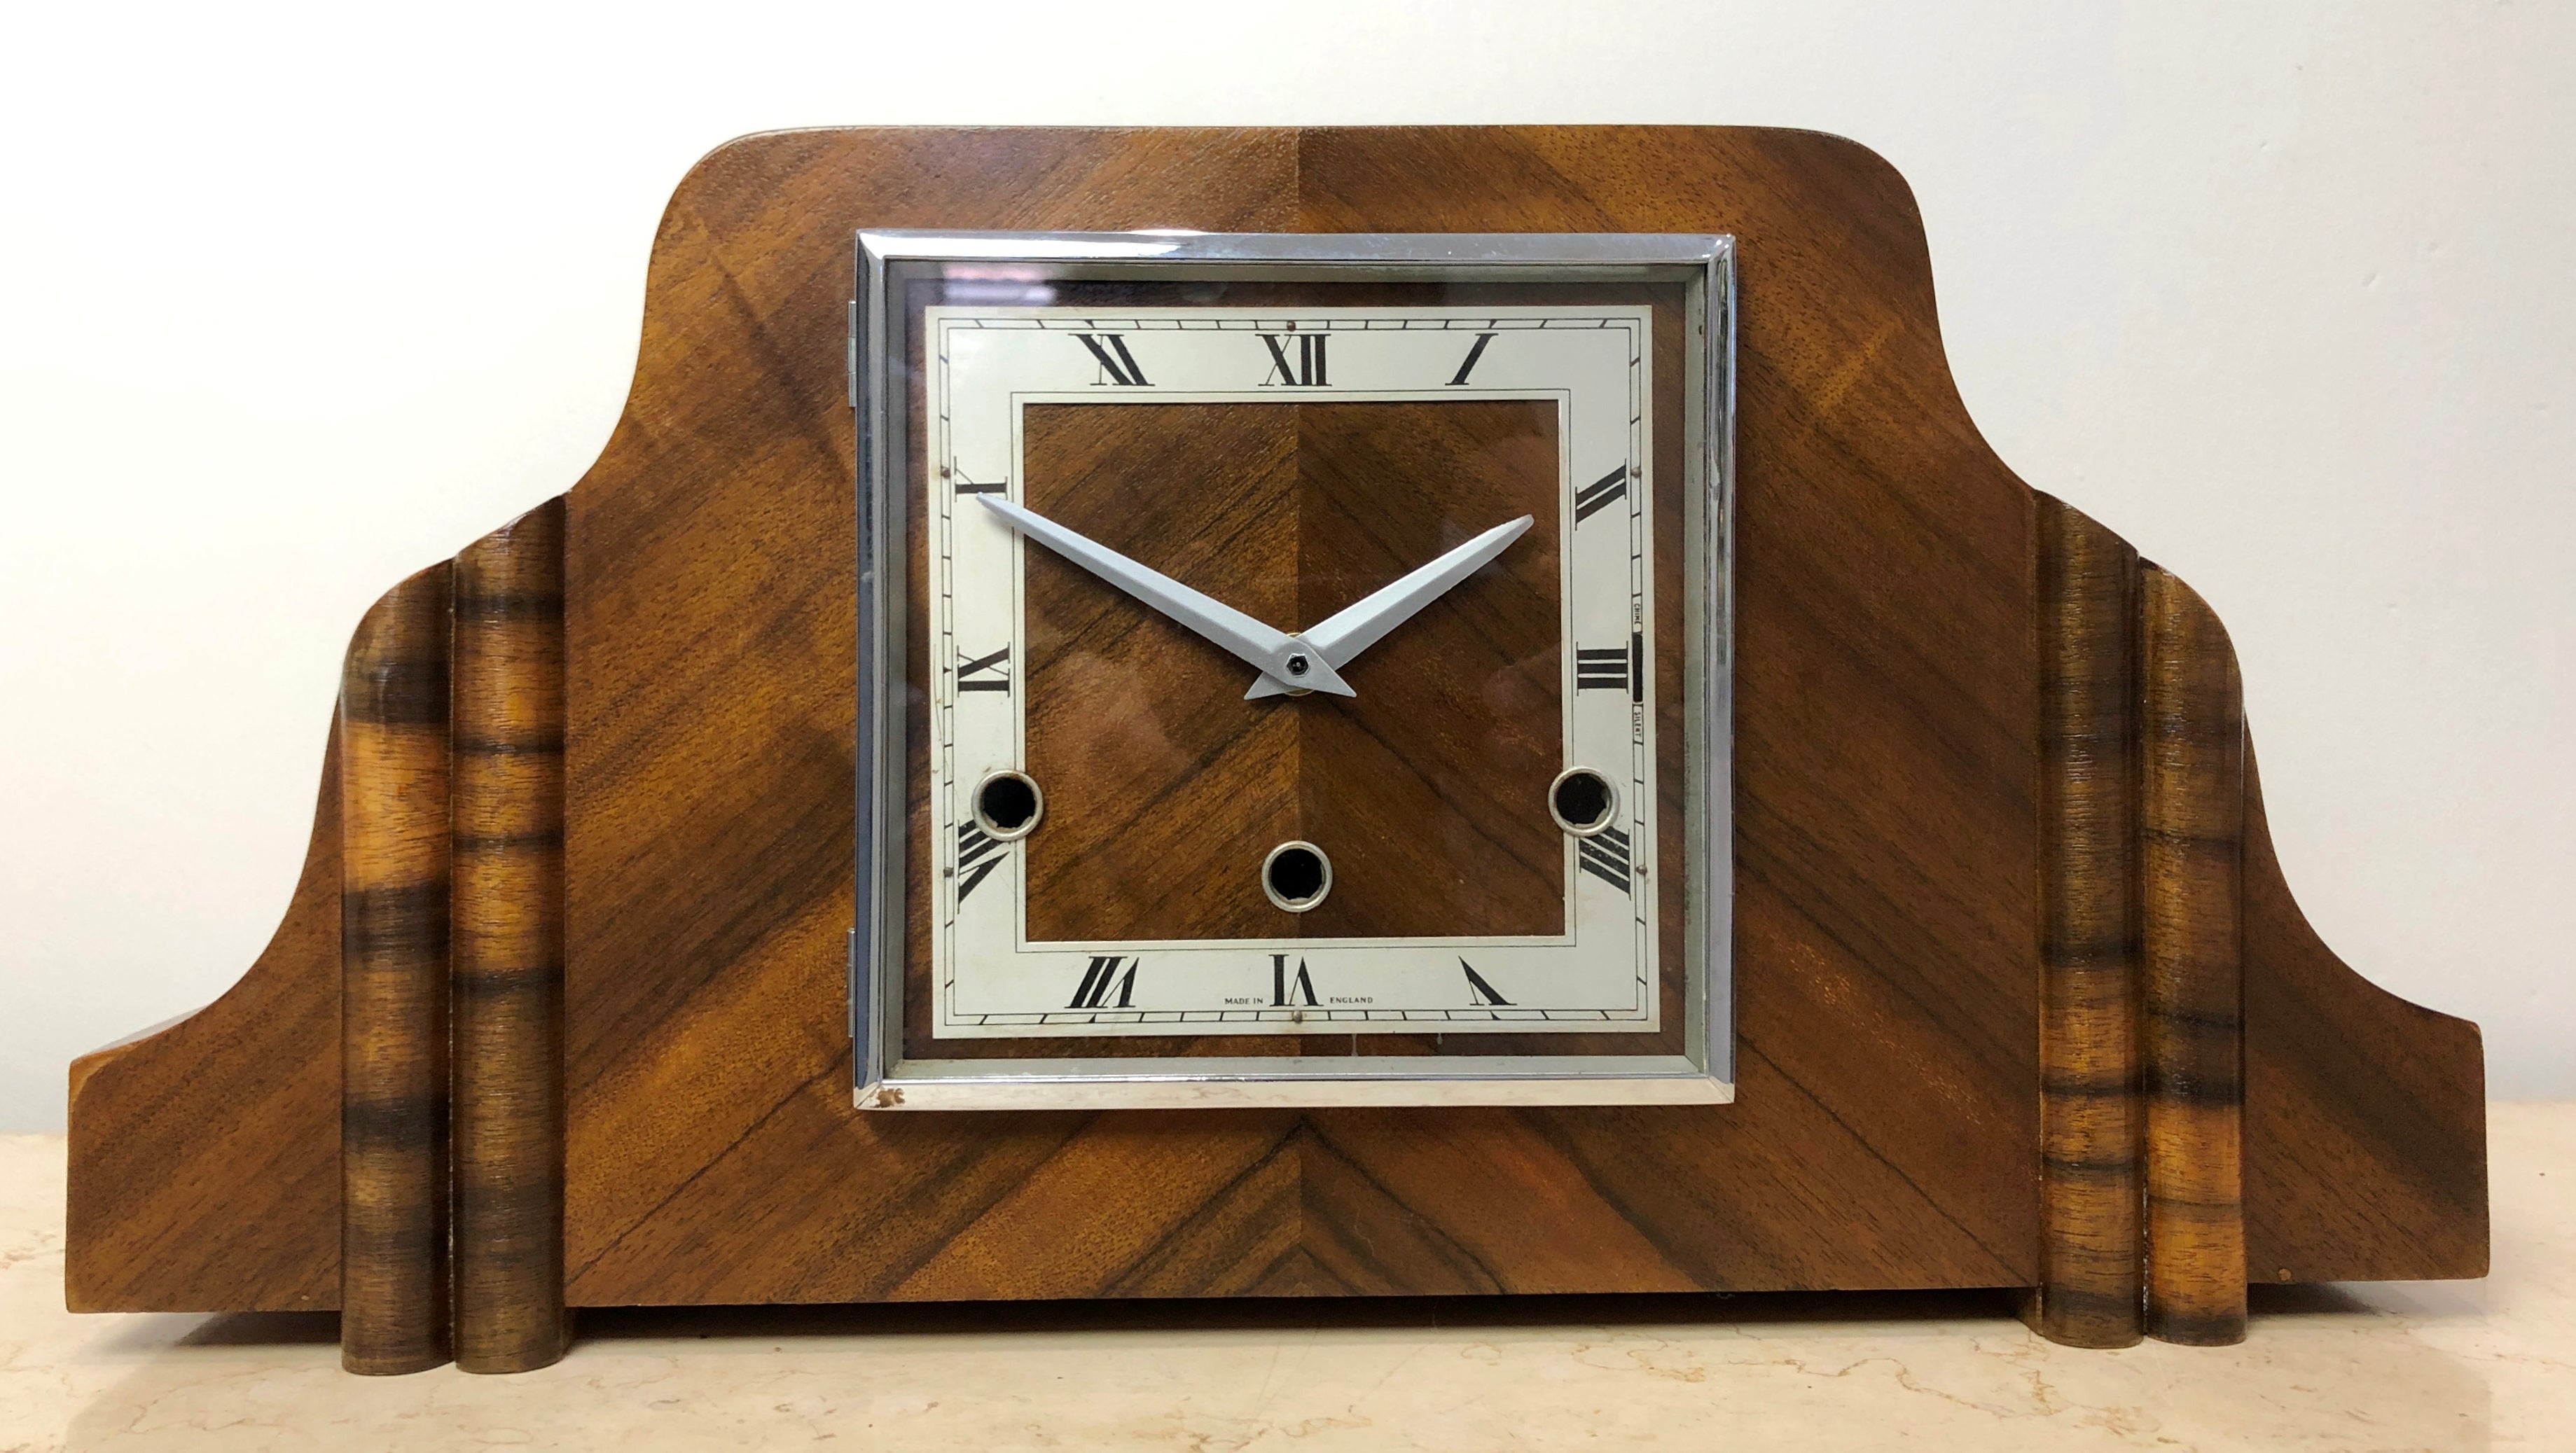 Original Westminster Vintage Battery Mantel Clock | eXibit collection